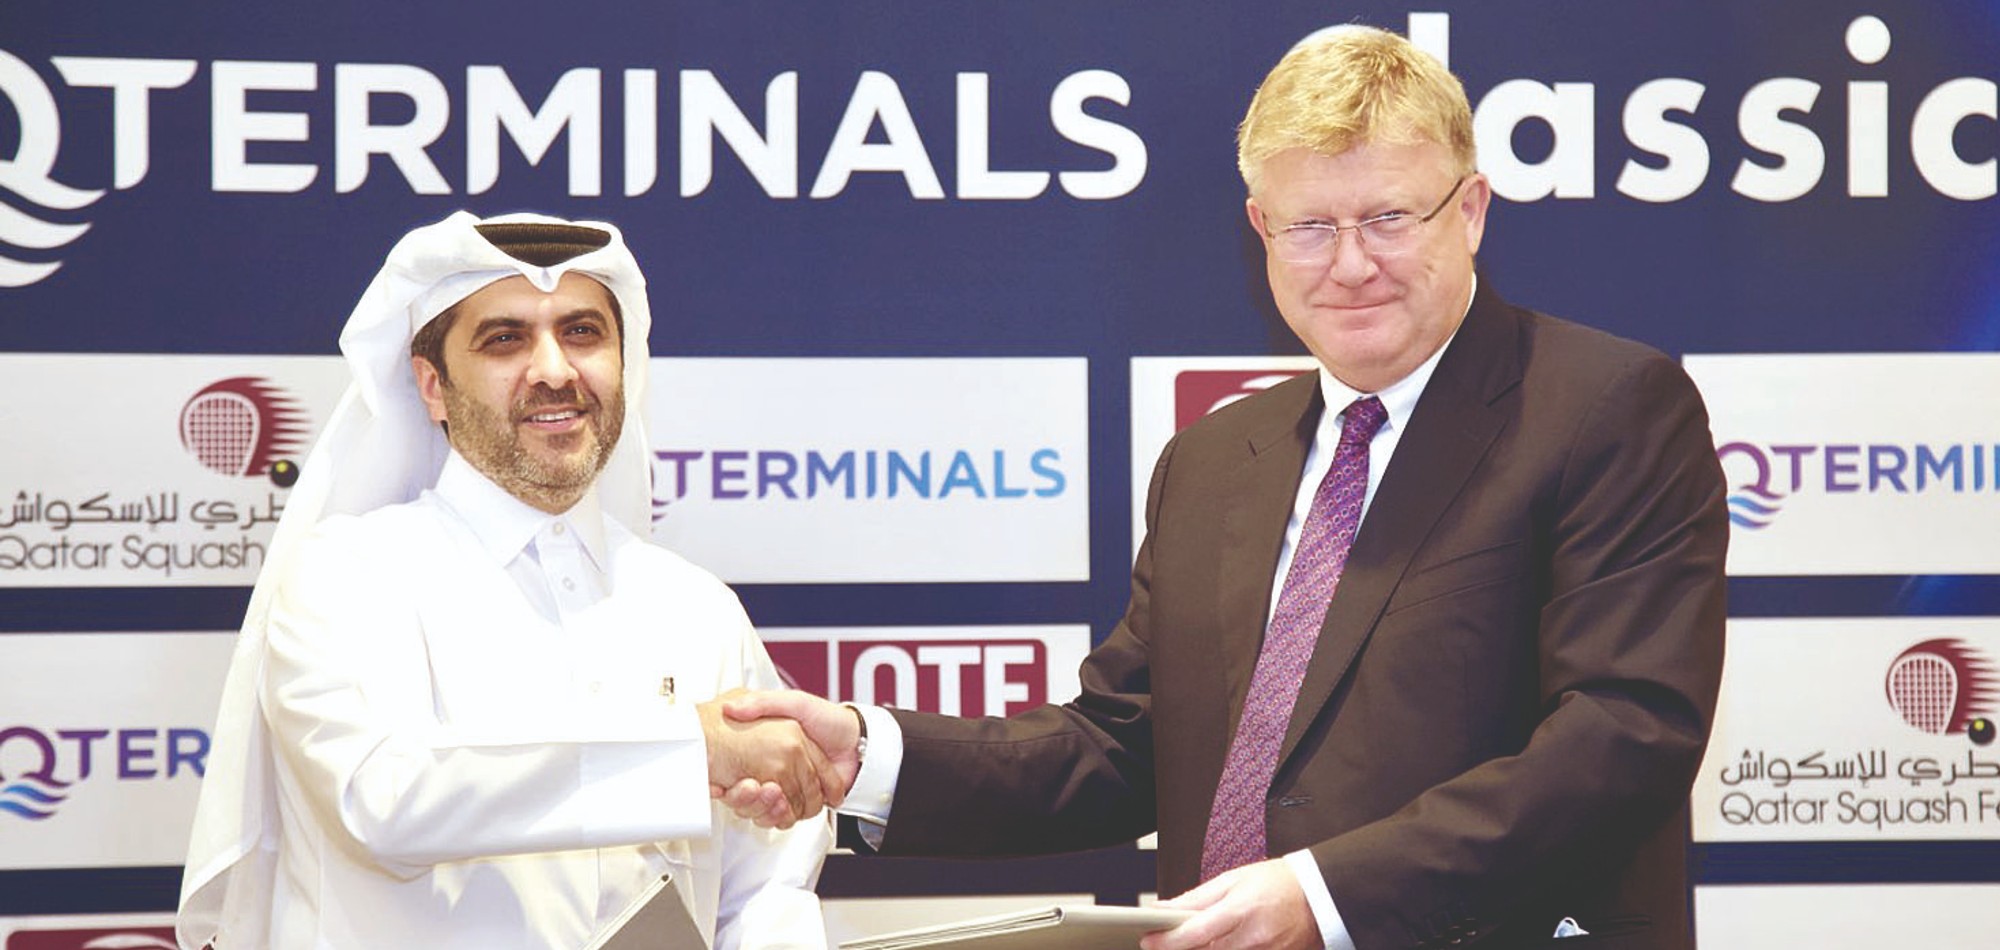 QTerminals becomes title sponsors of 2021 Qatar Classic Squash